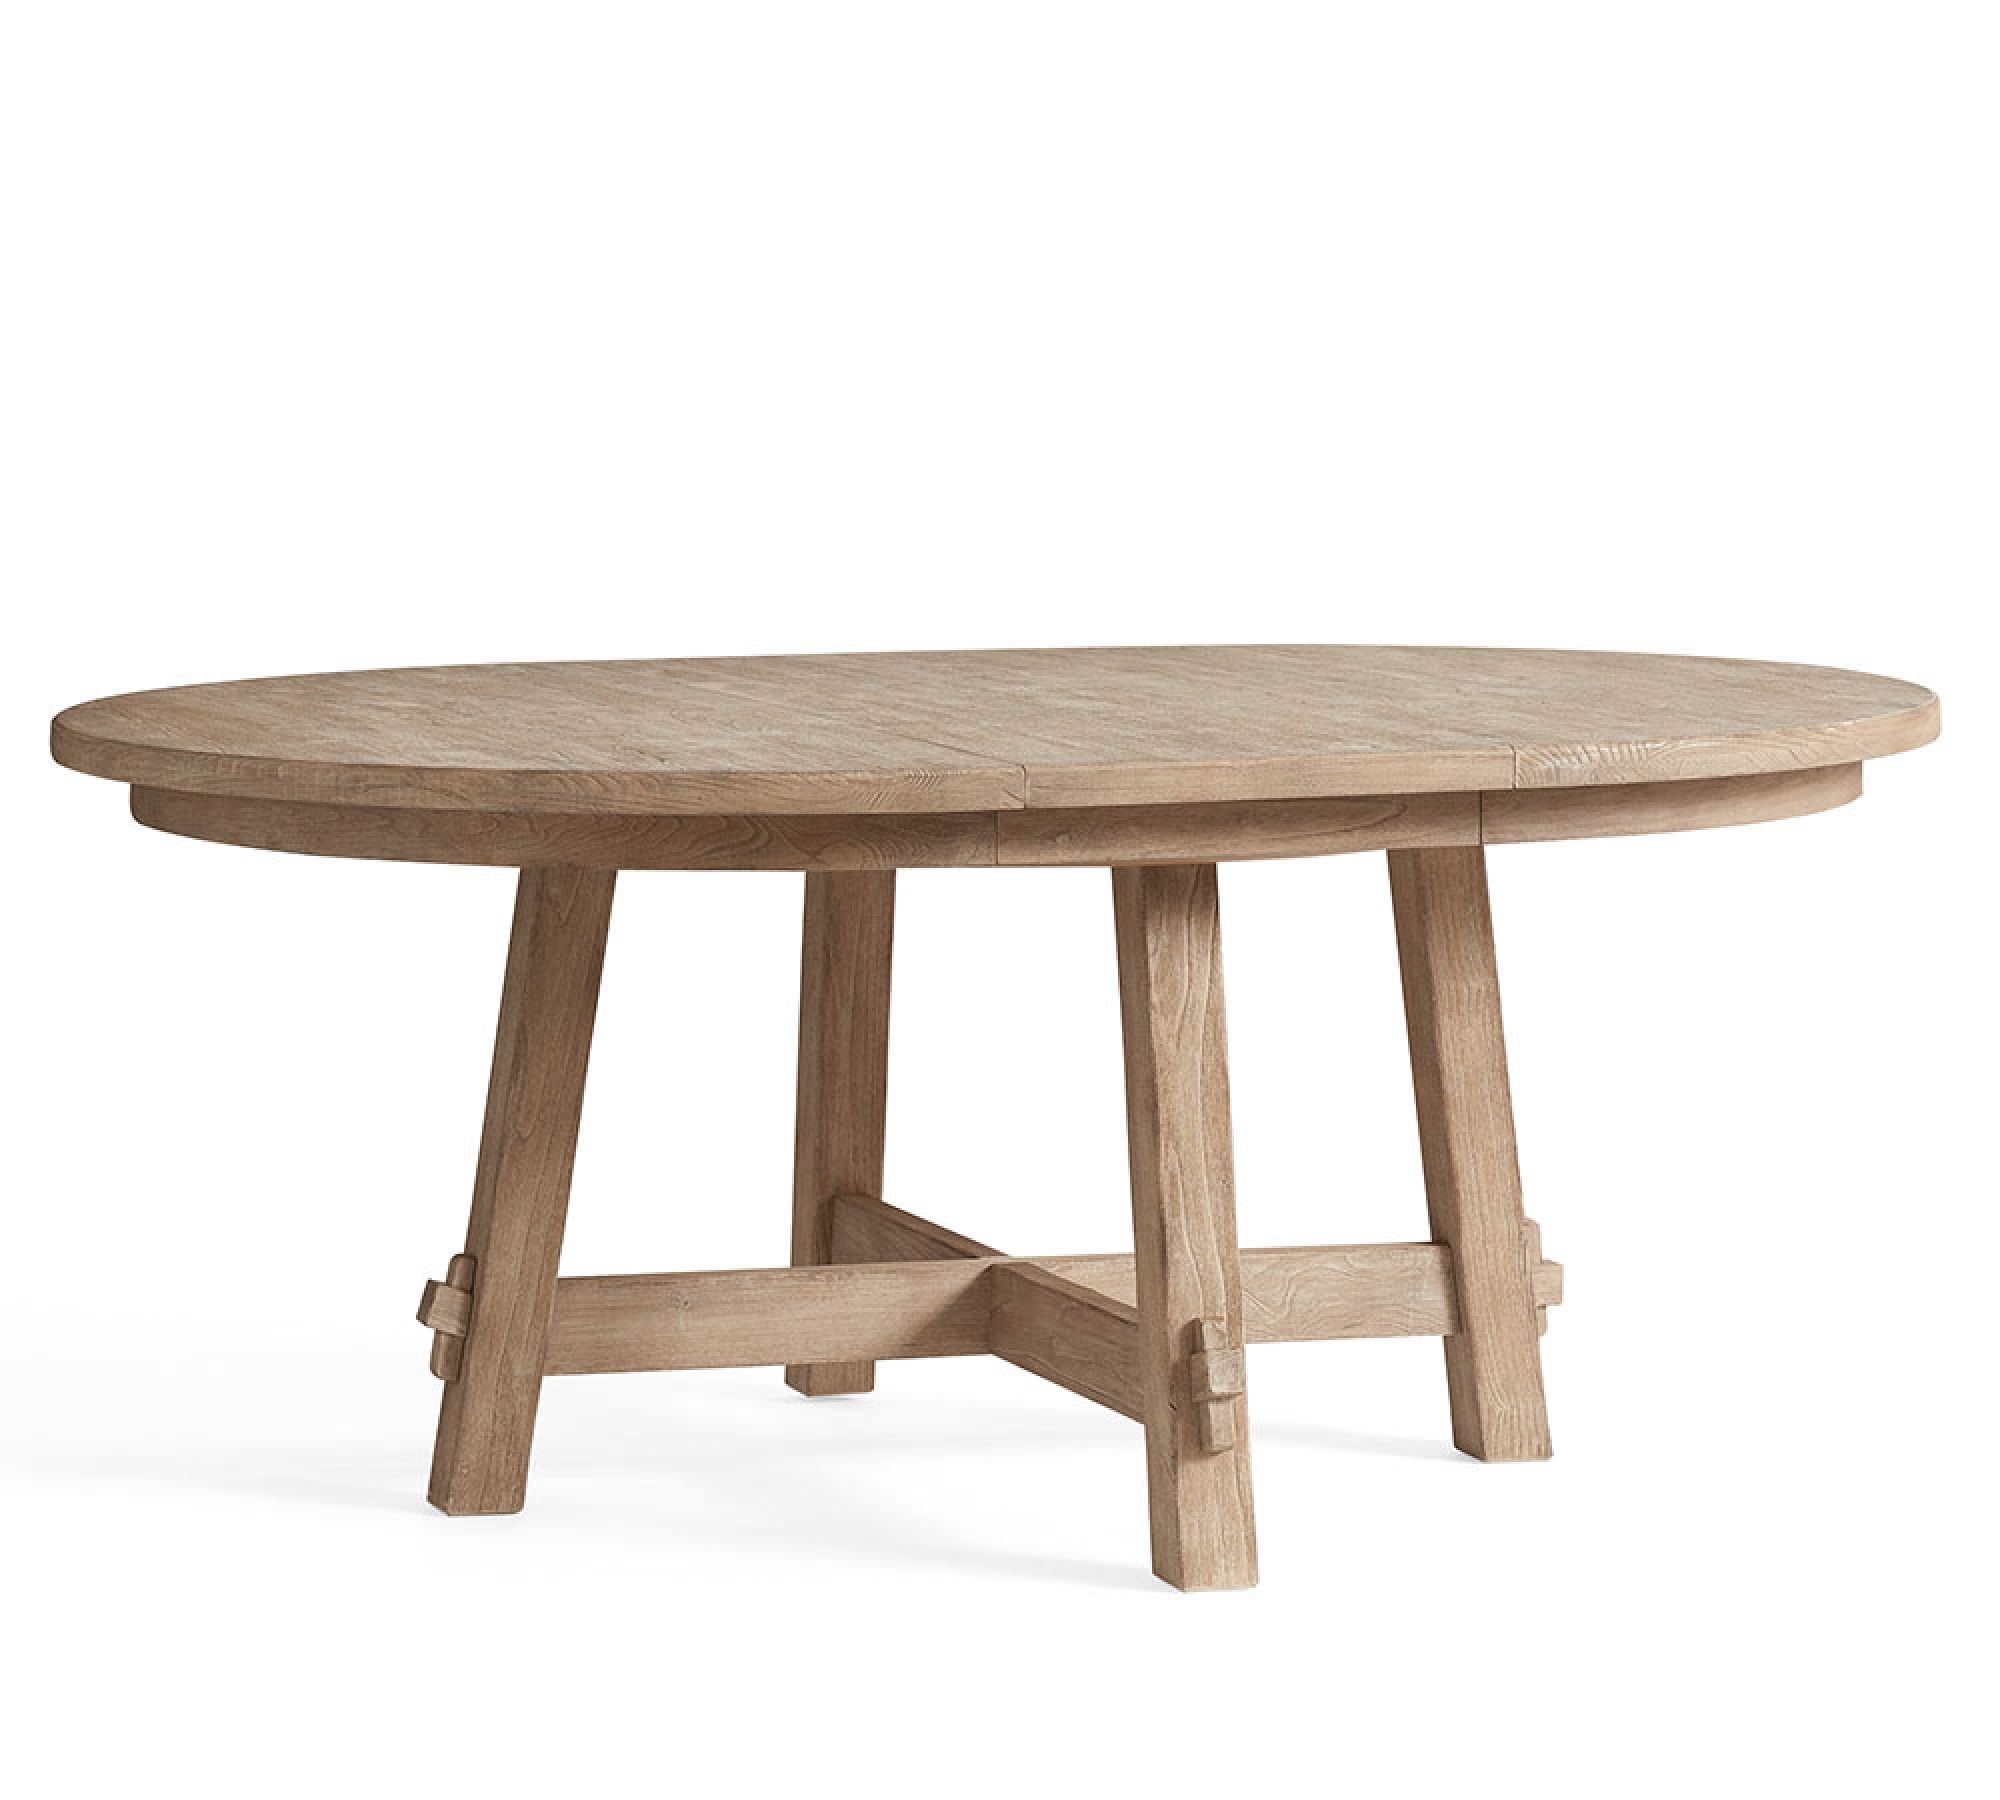 Toscana Round Expanding Dining Table, Seadrift - Image 1